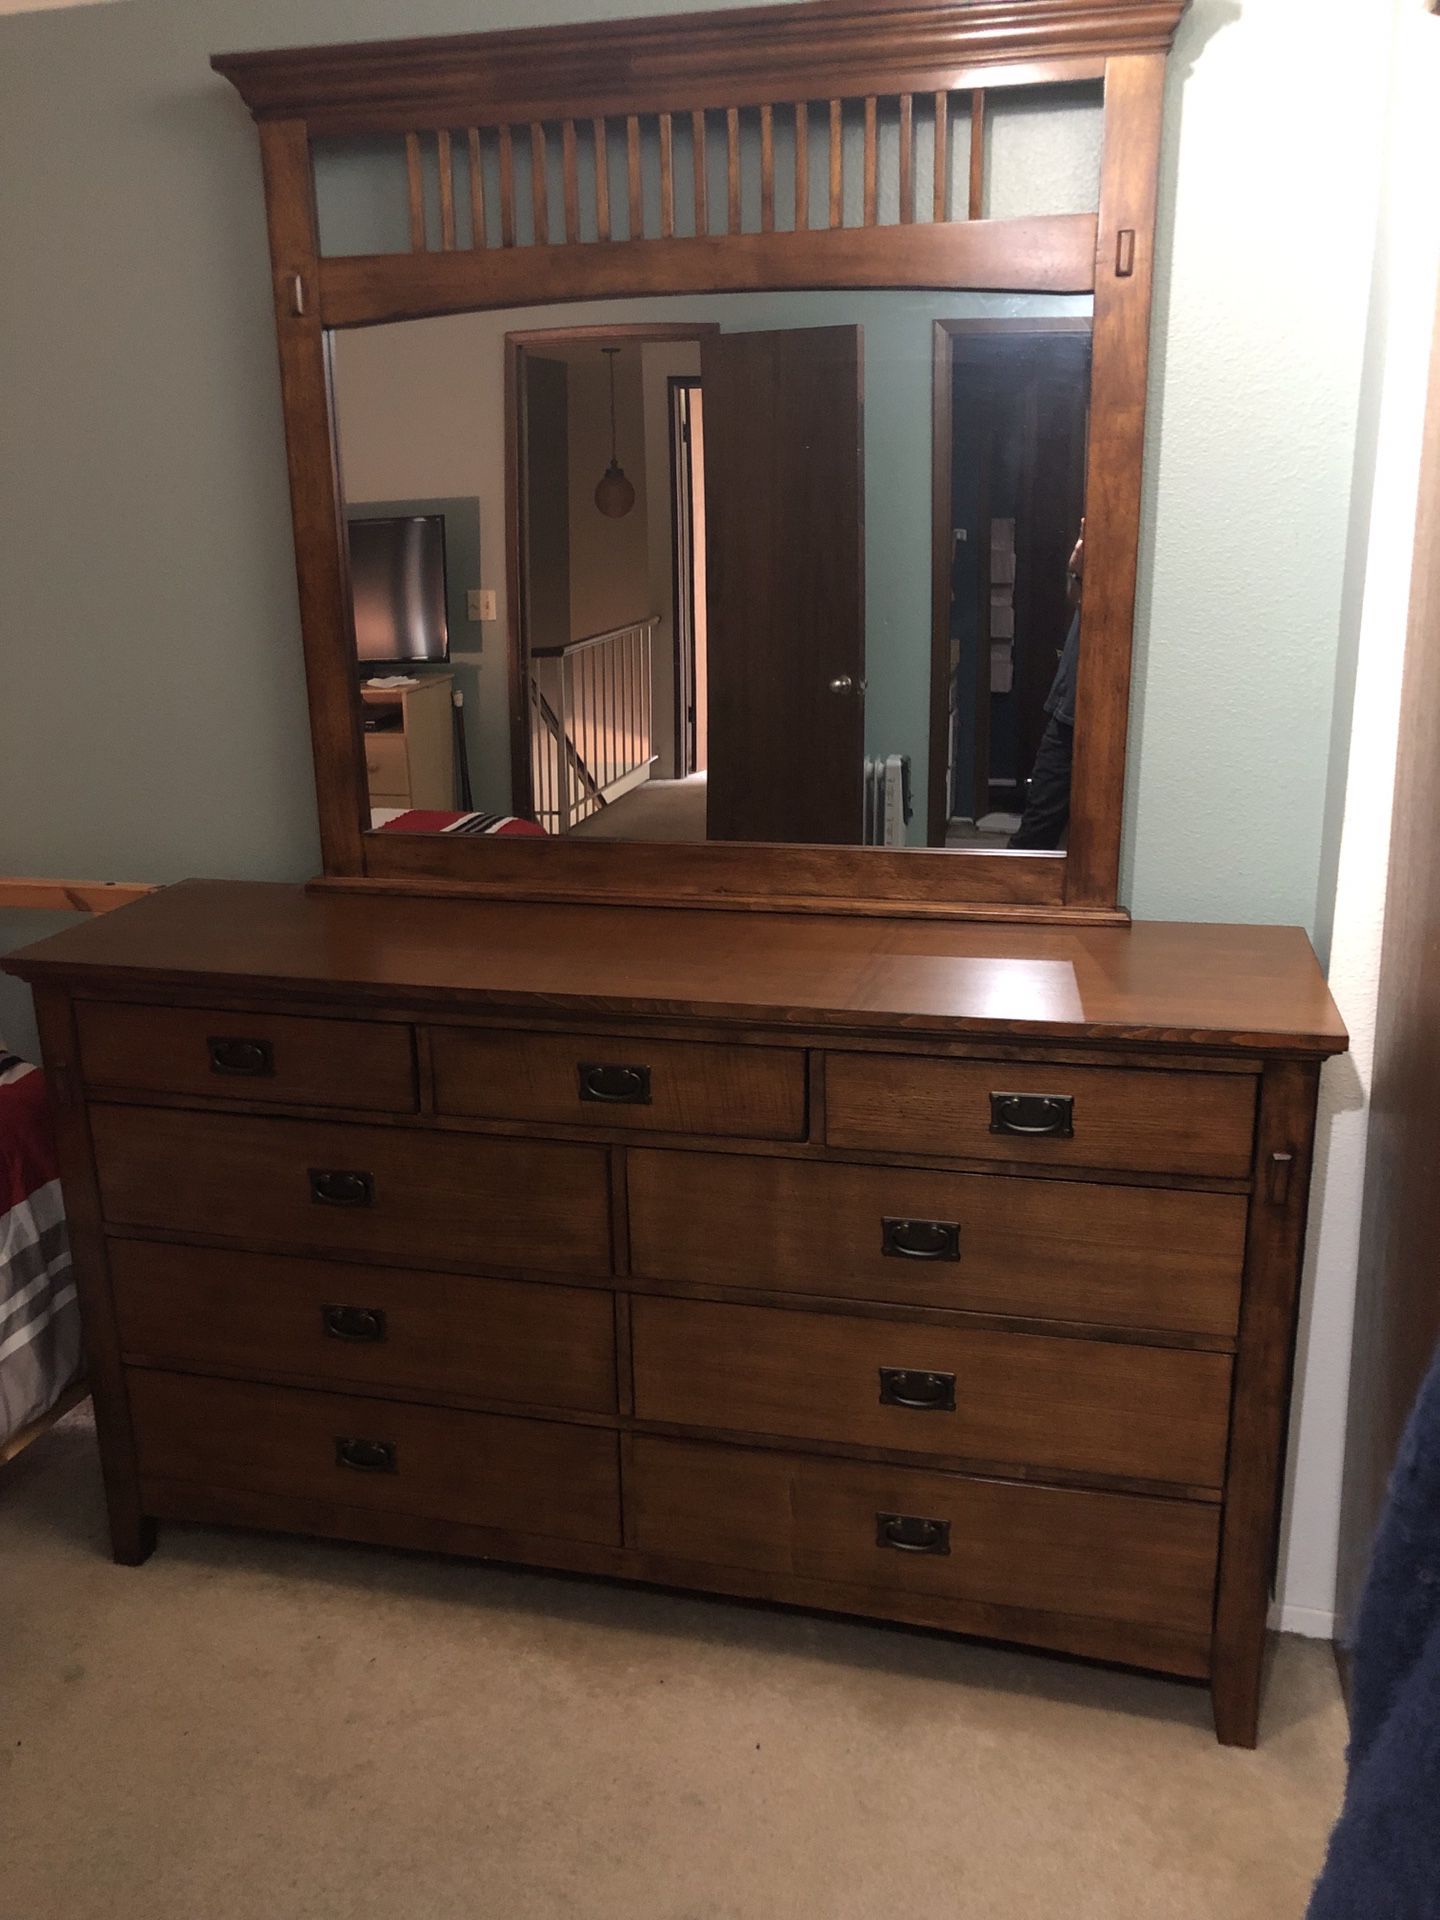 Wood dresser and mirror